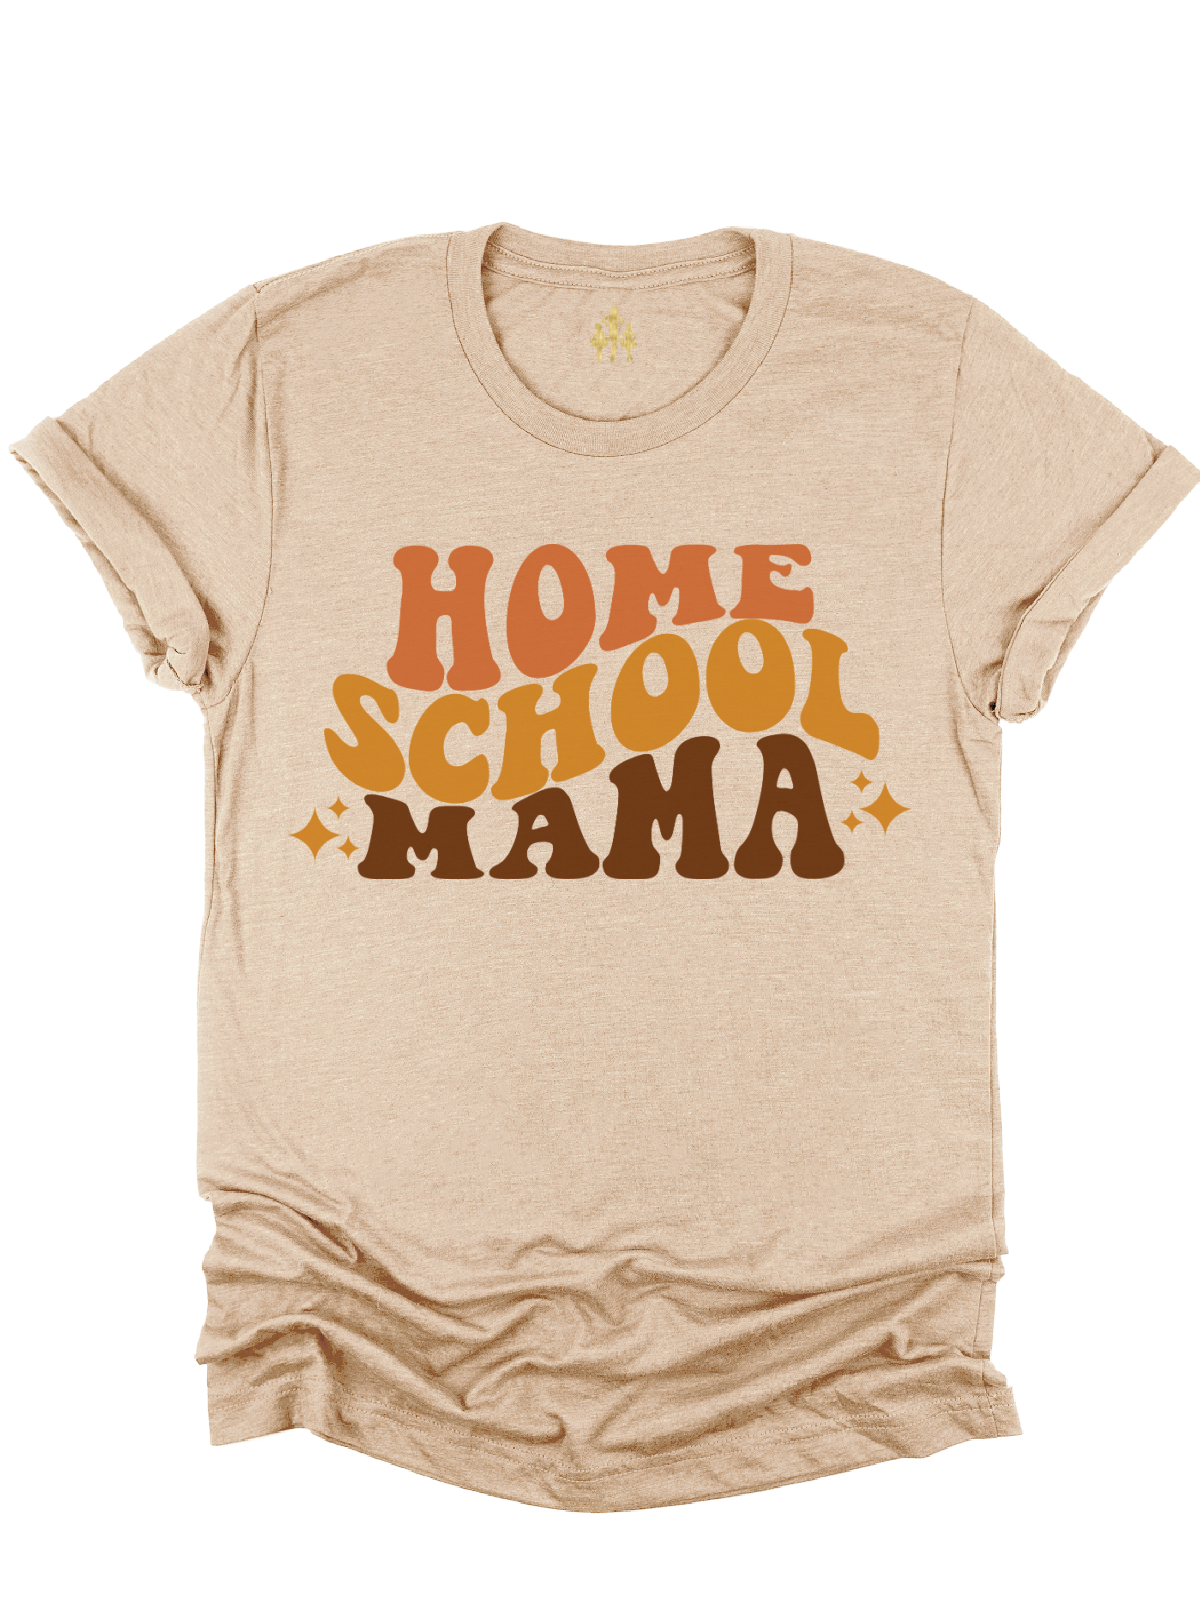 Homeschool Mama Adult Retro Shirt in Tan, White, and Black